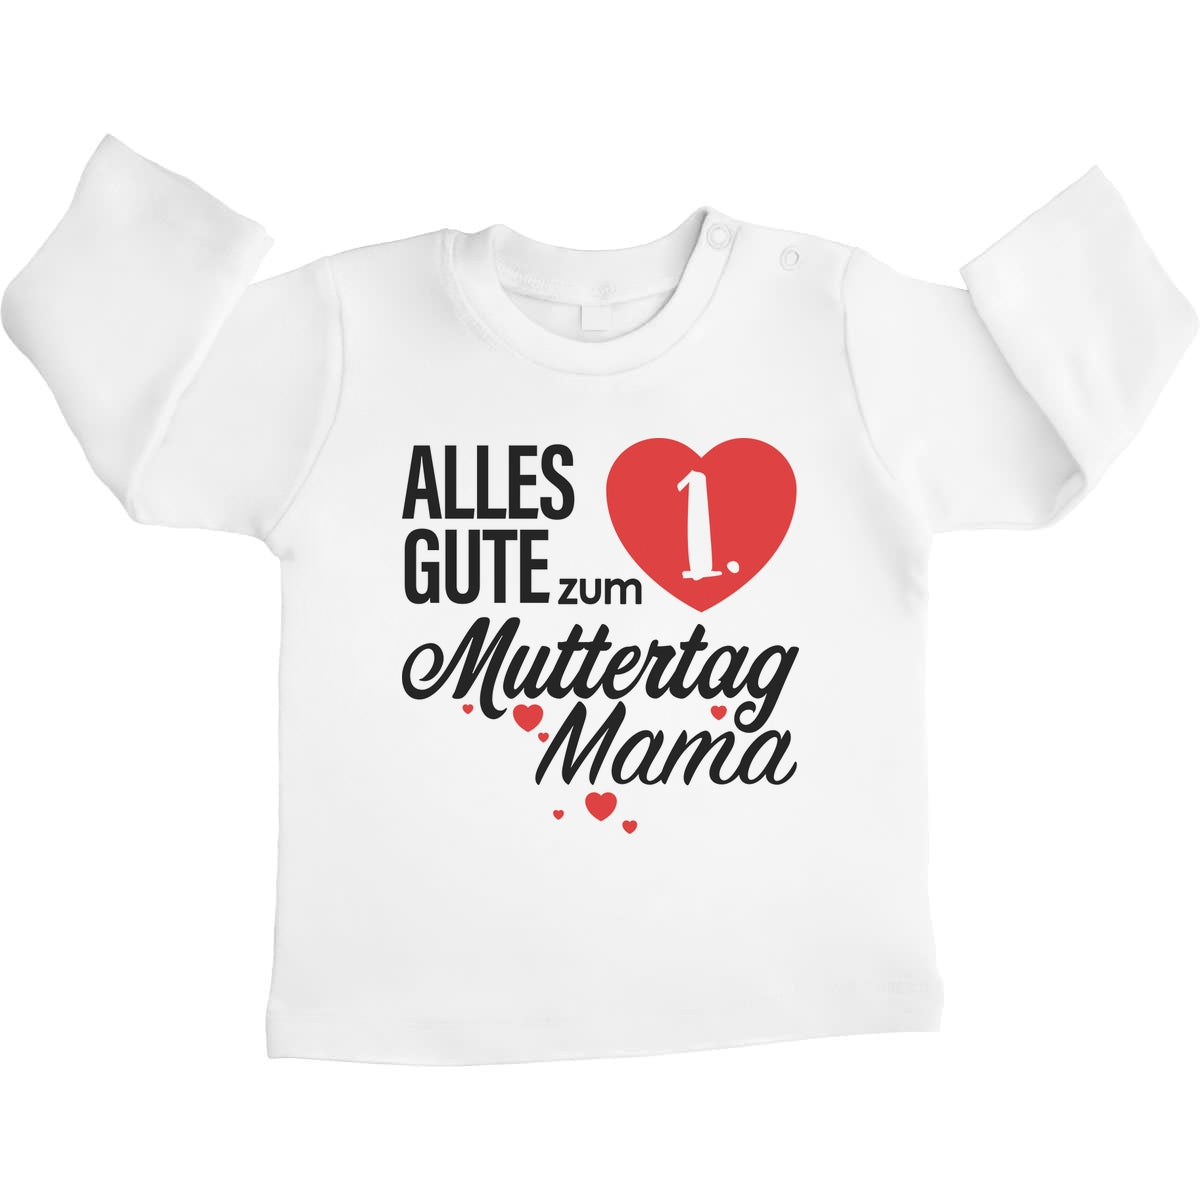 Geschenk - Alles Gute zum 1. Muttertag Mama Unisex Baby Langarmshirt Gr. 66-93